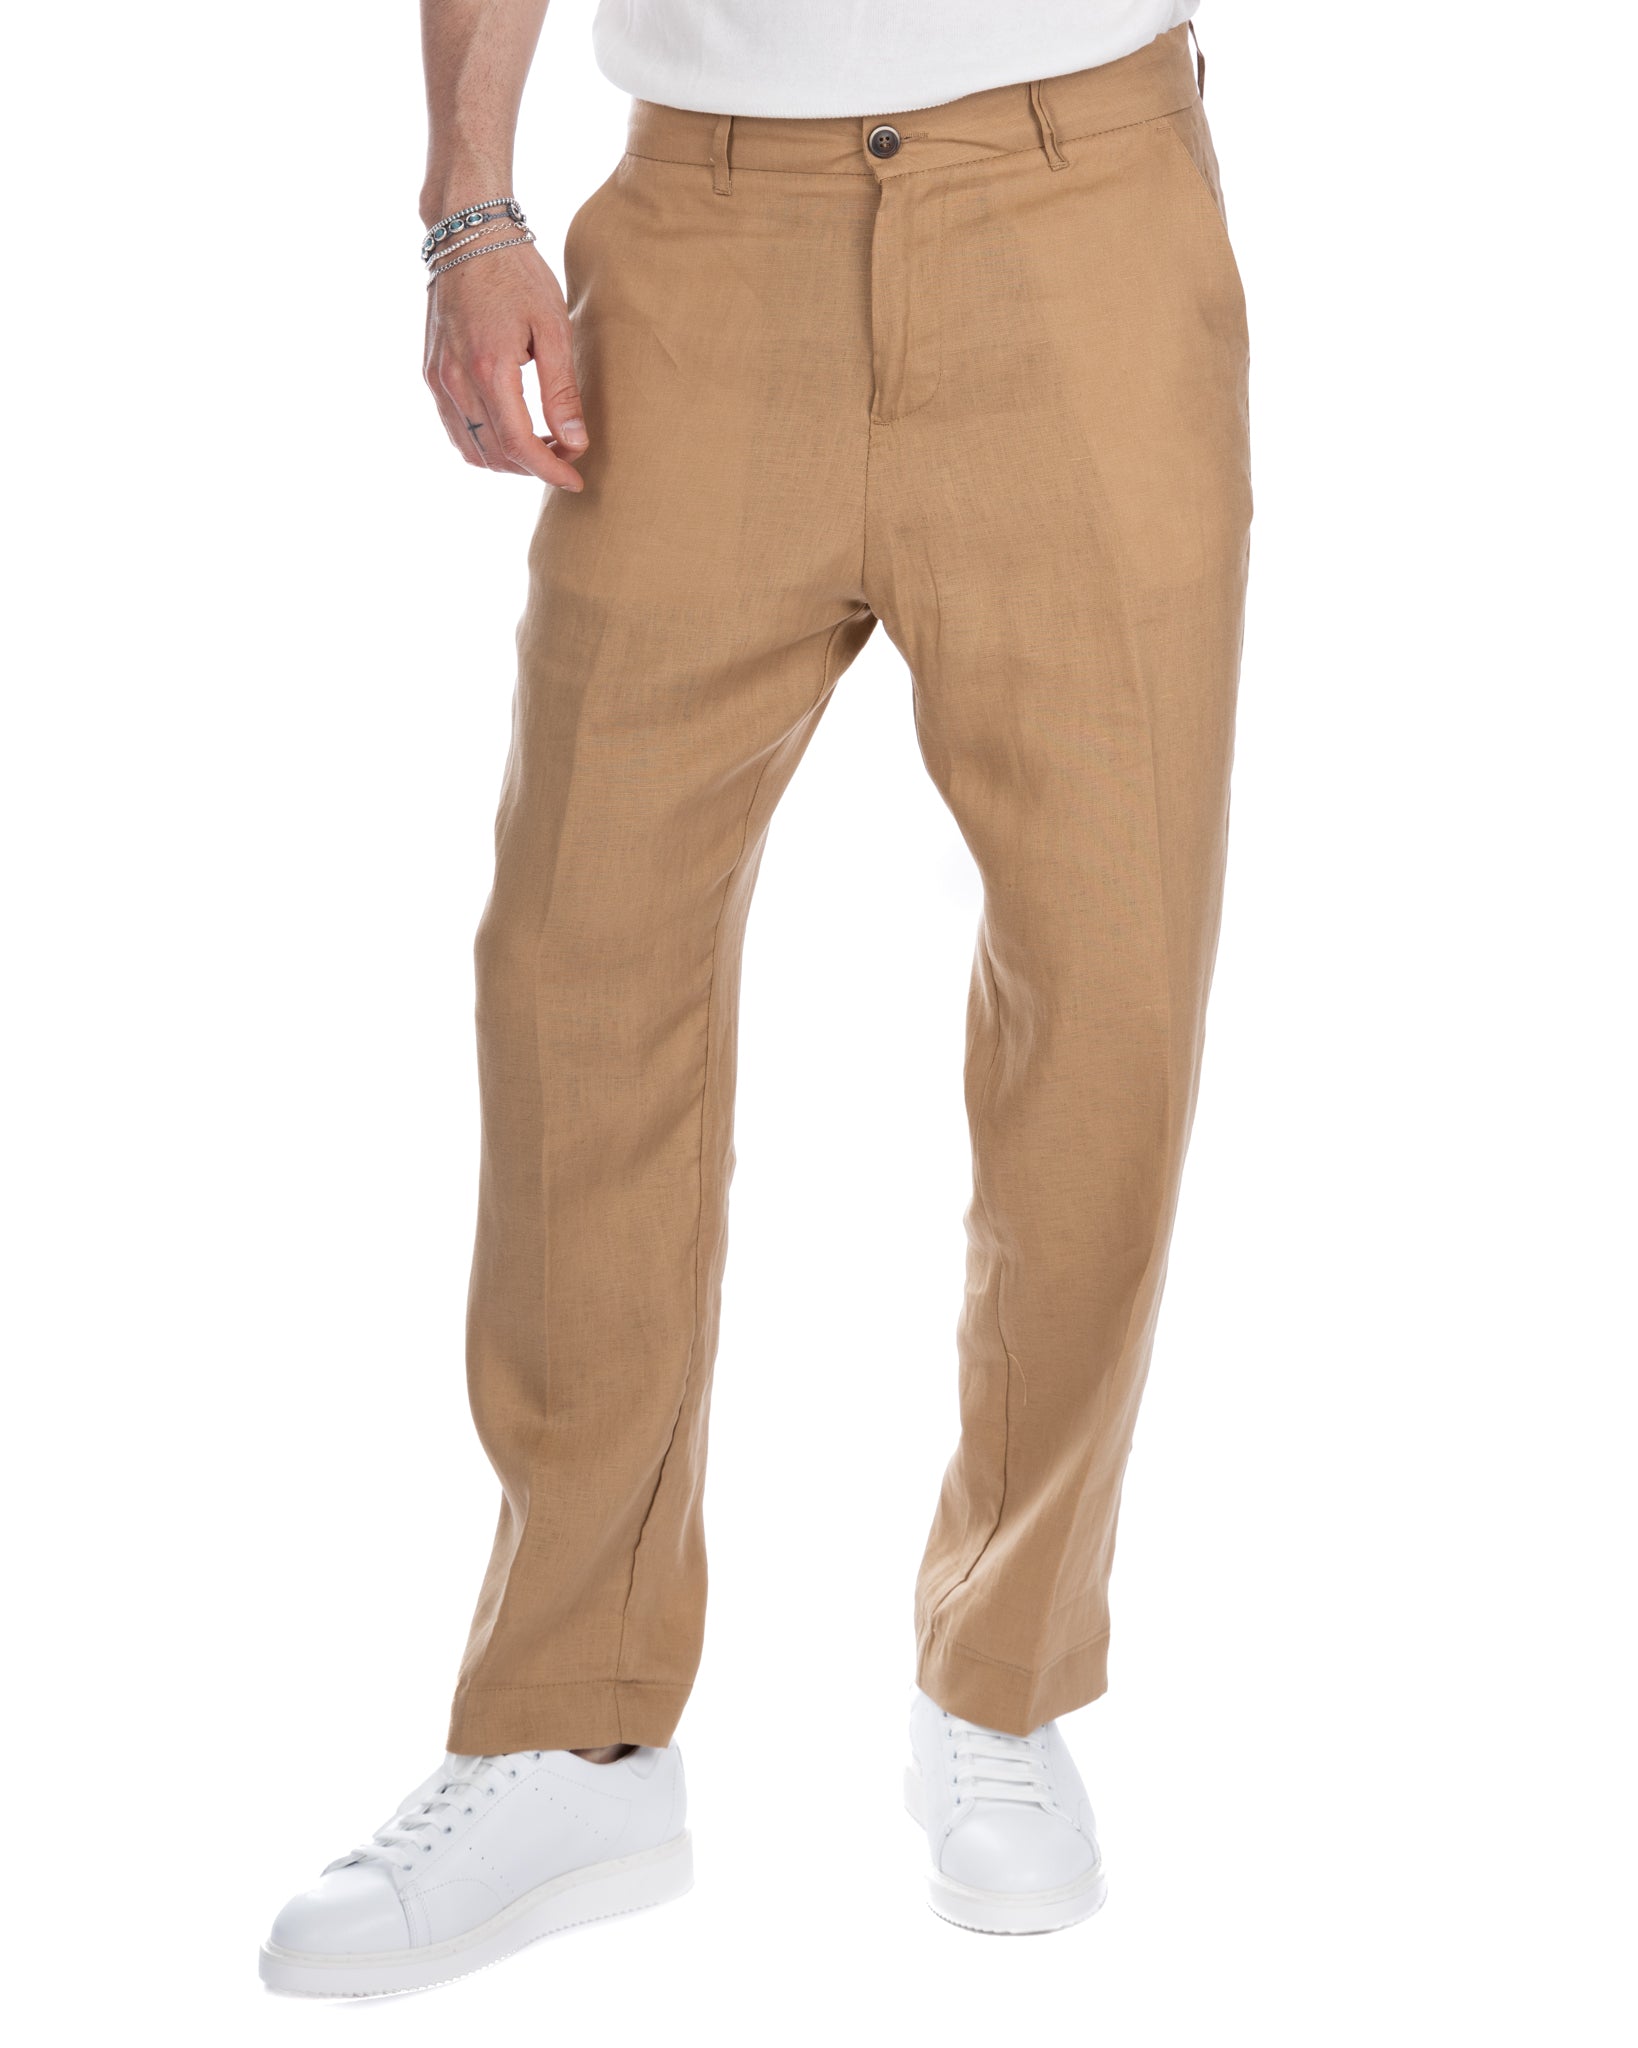 Lucas - camel wide trousers in pure linen